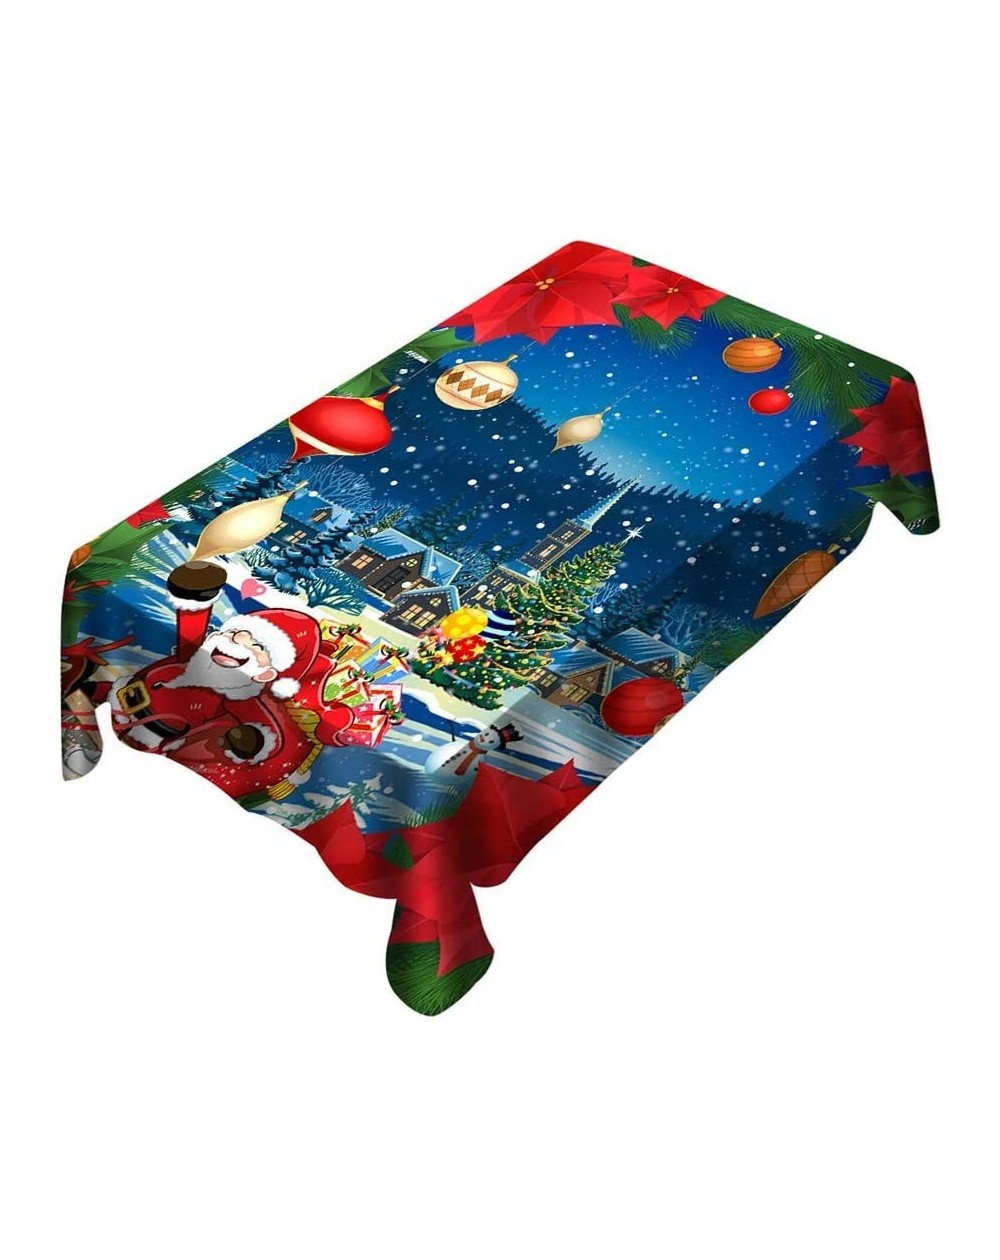 Swags Christmas DecorChristmas Tablecloth/Chair Cover Digital Printing Christmas Table Decoration- Christmas Ornaments Advent...